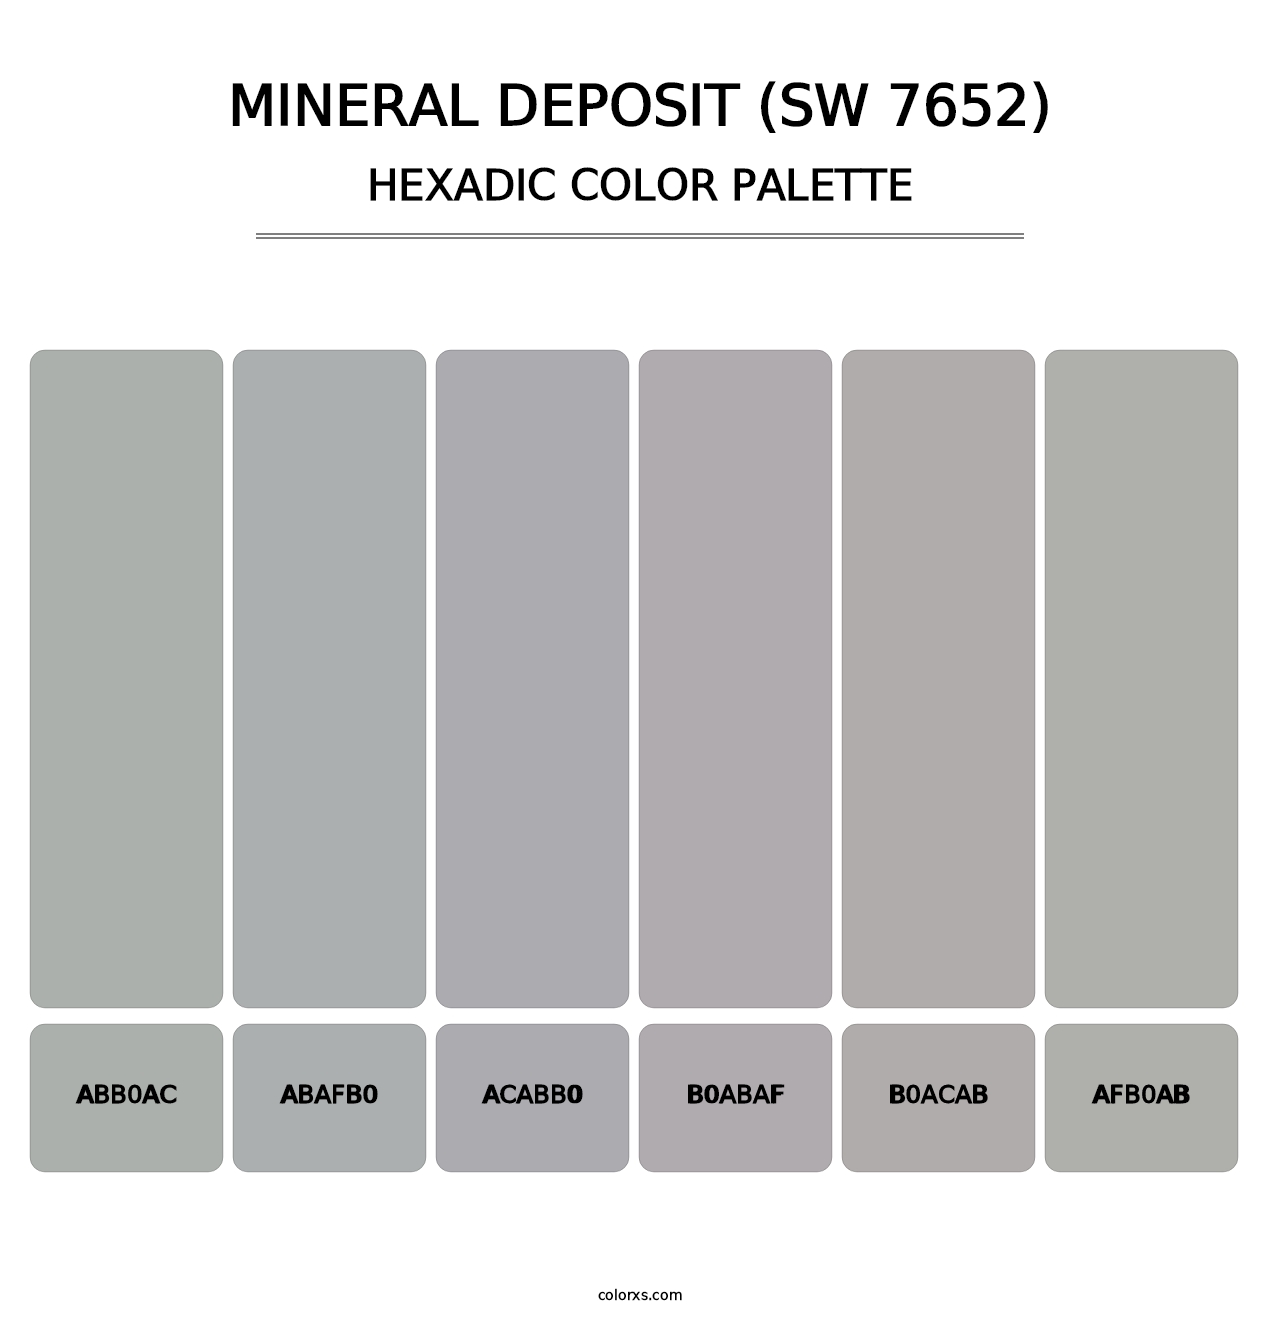 Mineral Deposit (SW 7652) - Hexadic Color Palette